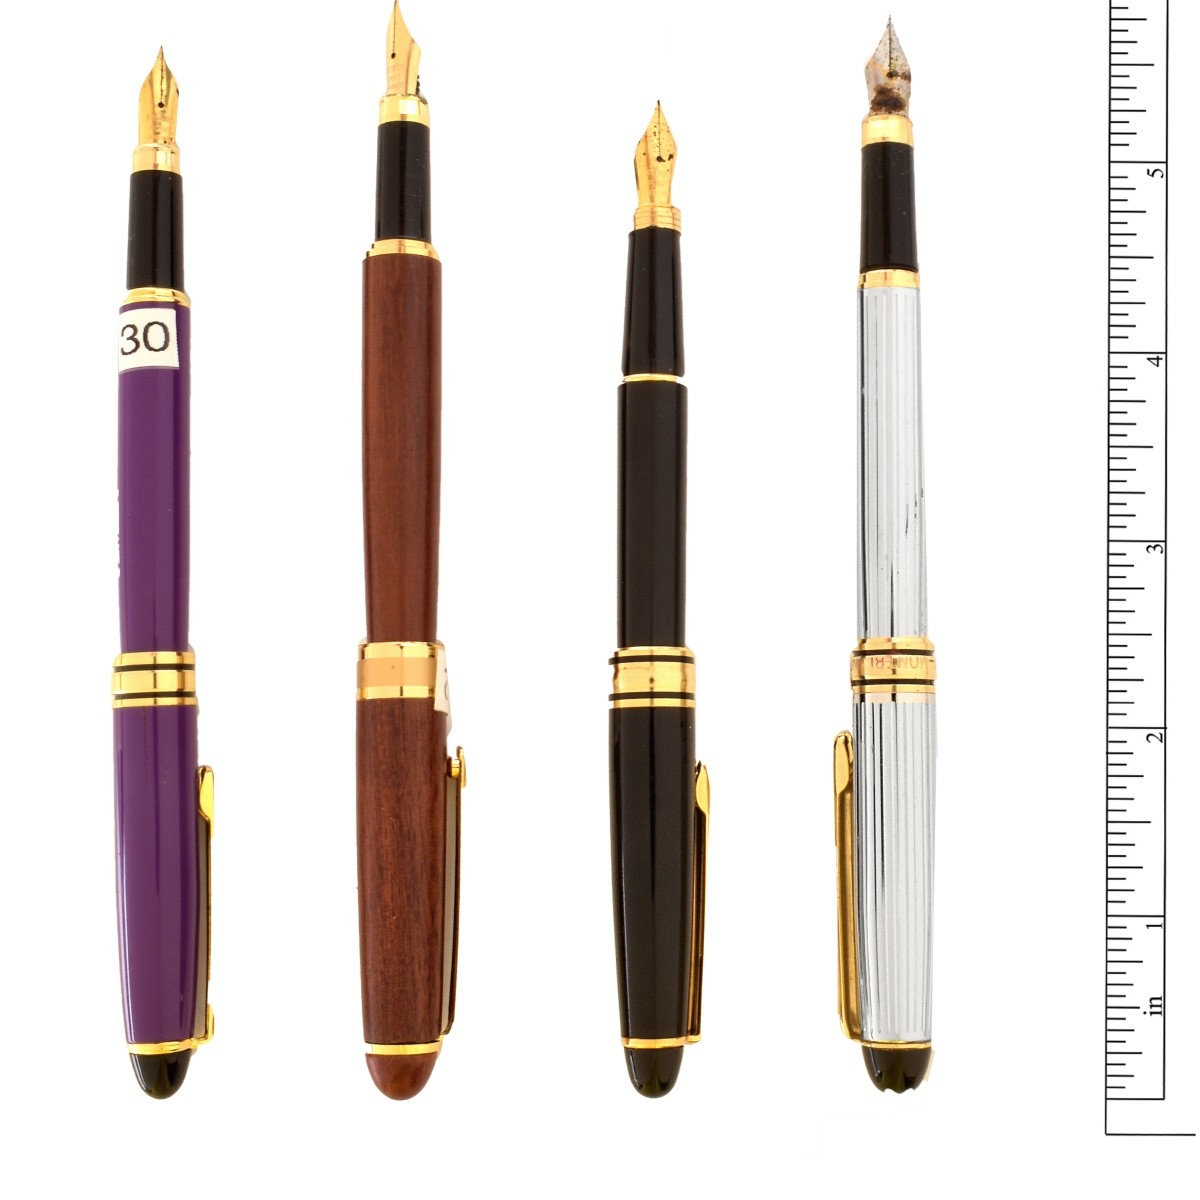 Four Fountain Pens